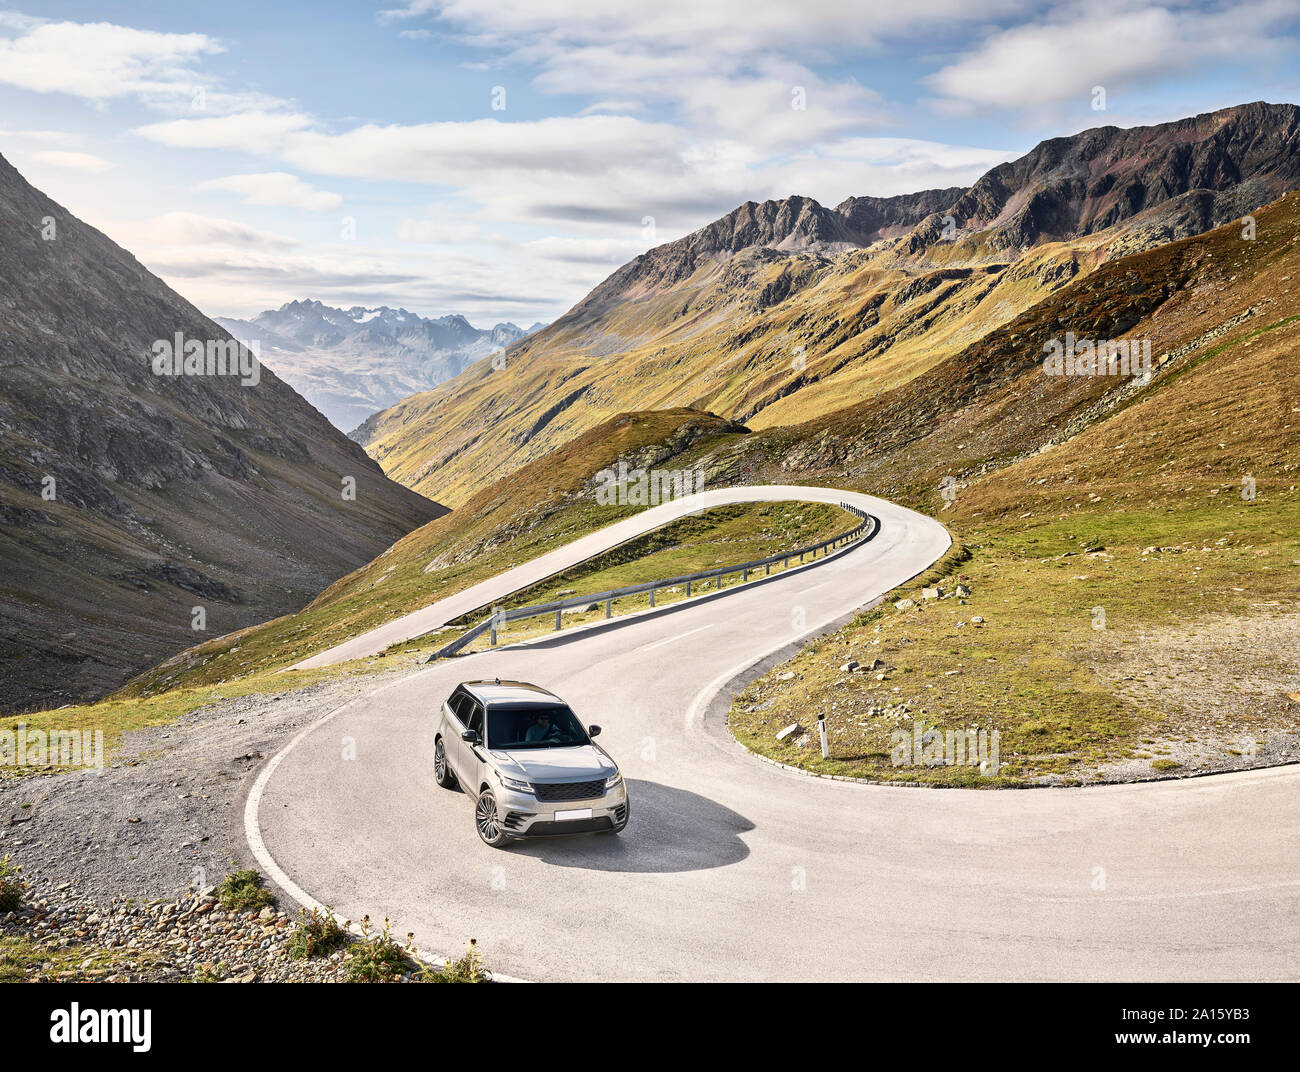 Sports Utility Vehicle on high alpine road, Timmelsjoch, Tyrol, Austria Stock Photo